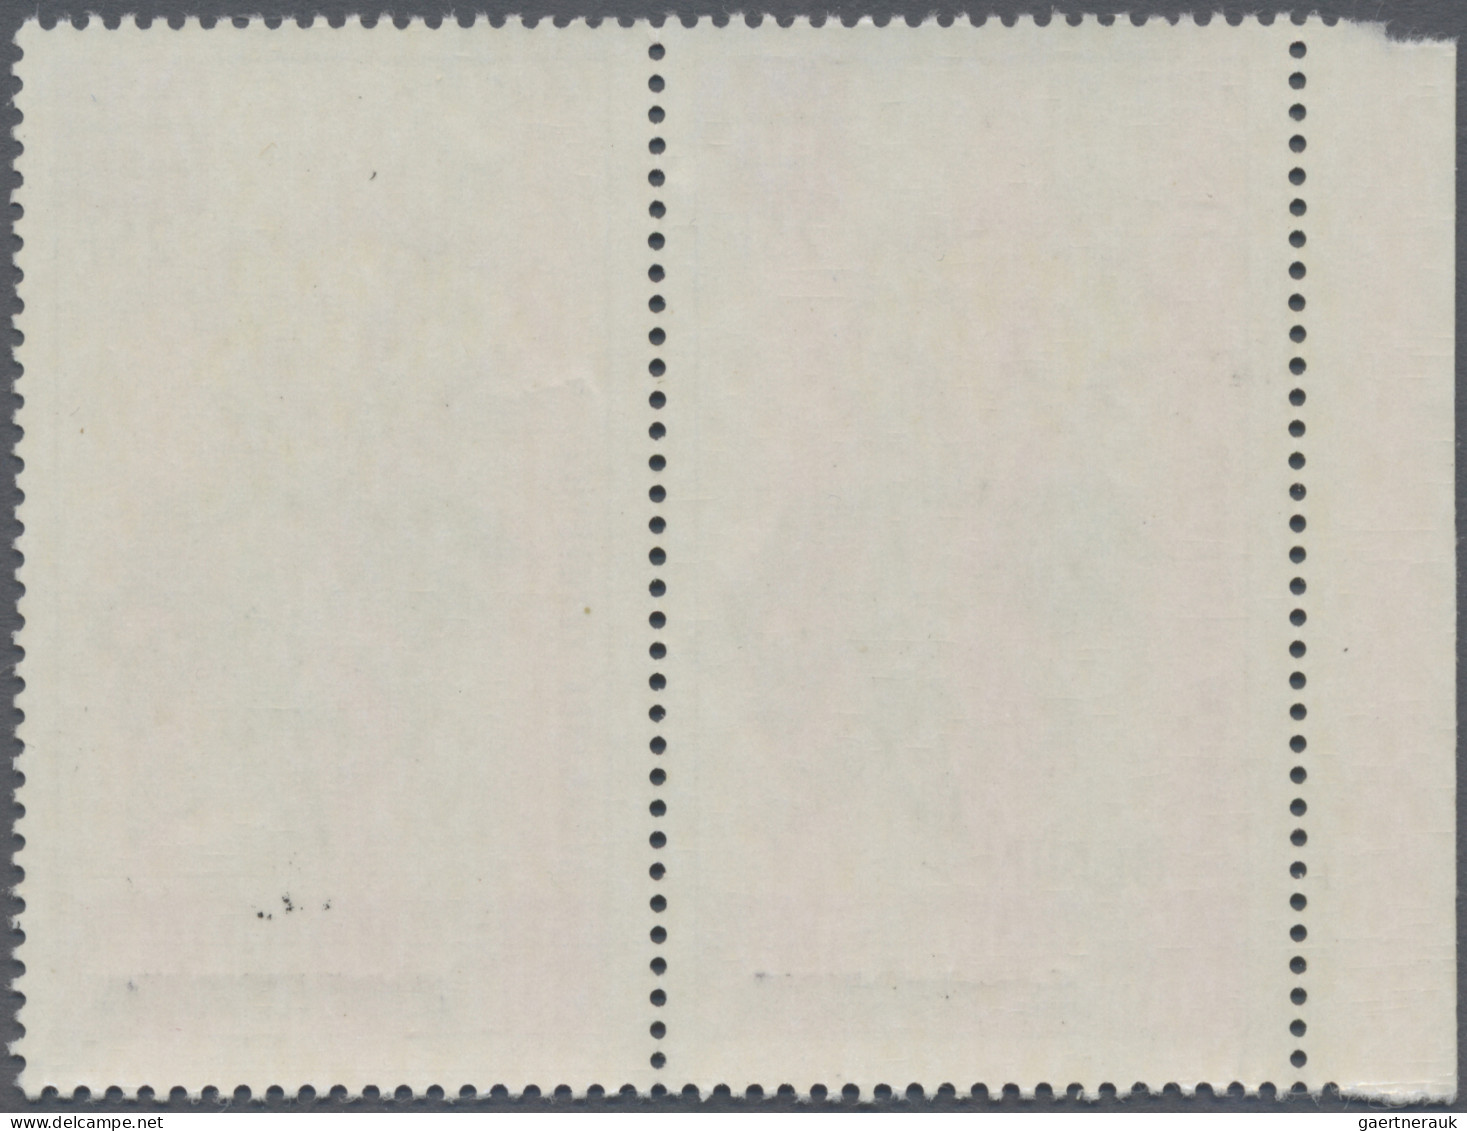 Benin: 2008/2009. Horizontal Pair '25F On 10F', One Stamp Without BENIN Overprin - Benin - Dahomey (1960-...)